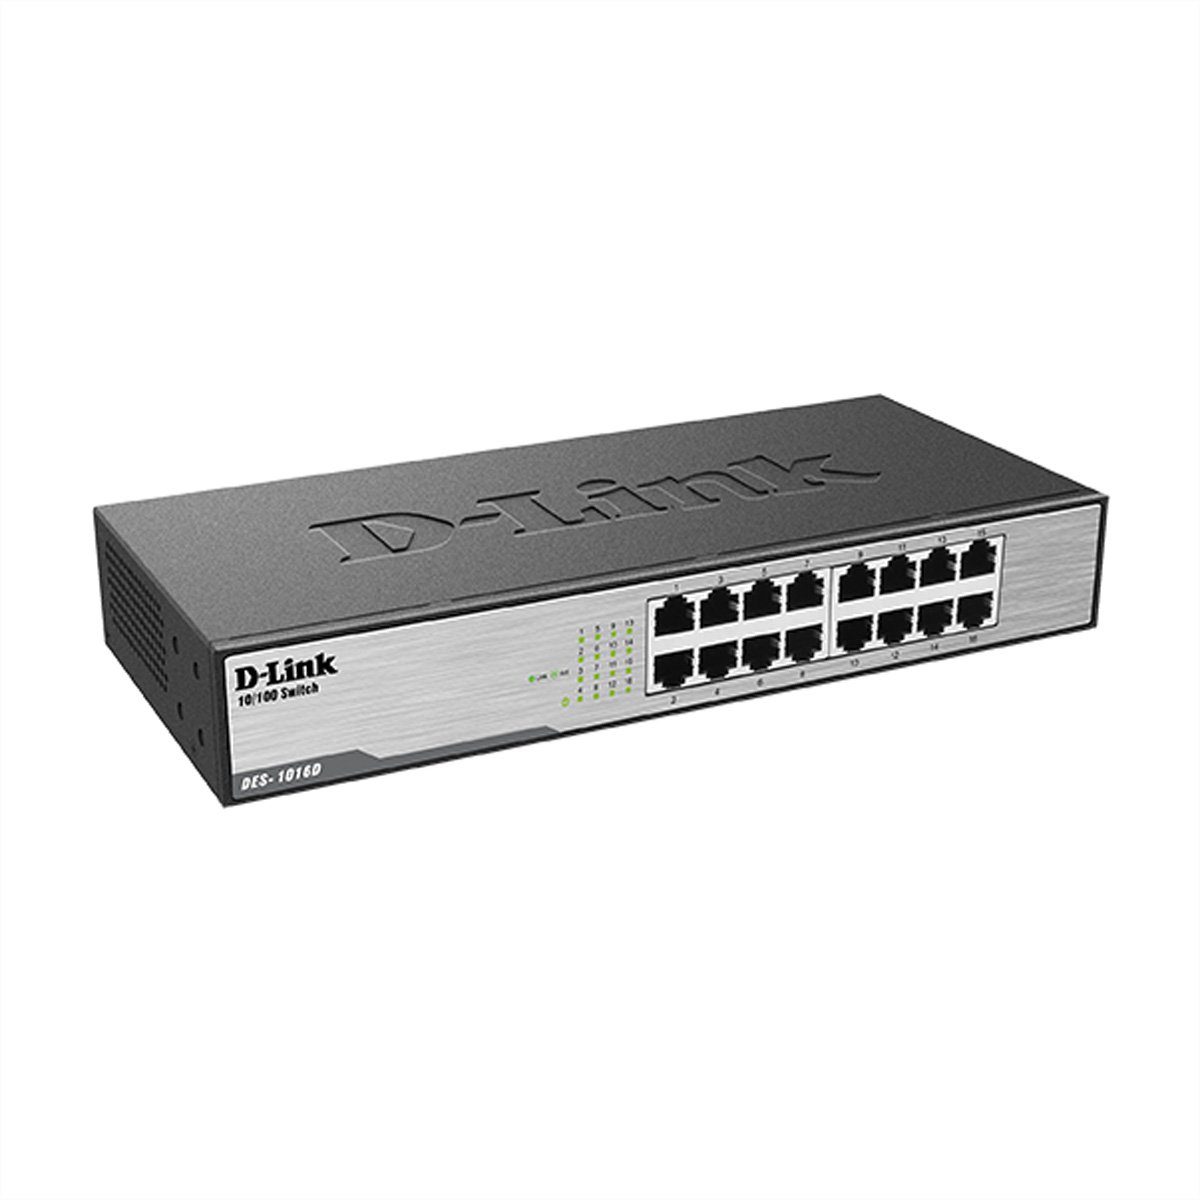 D-Link DES-1016D/E 16-Port Fast Ethernet Switch Netzwerk-Switch